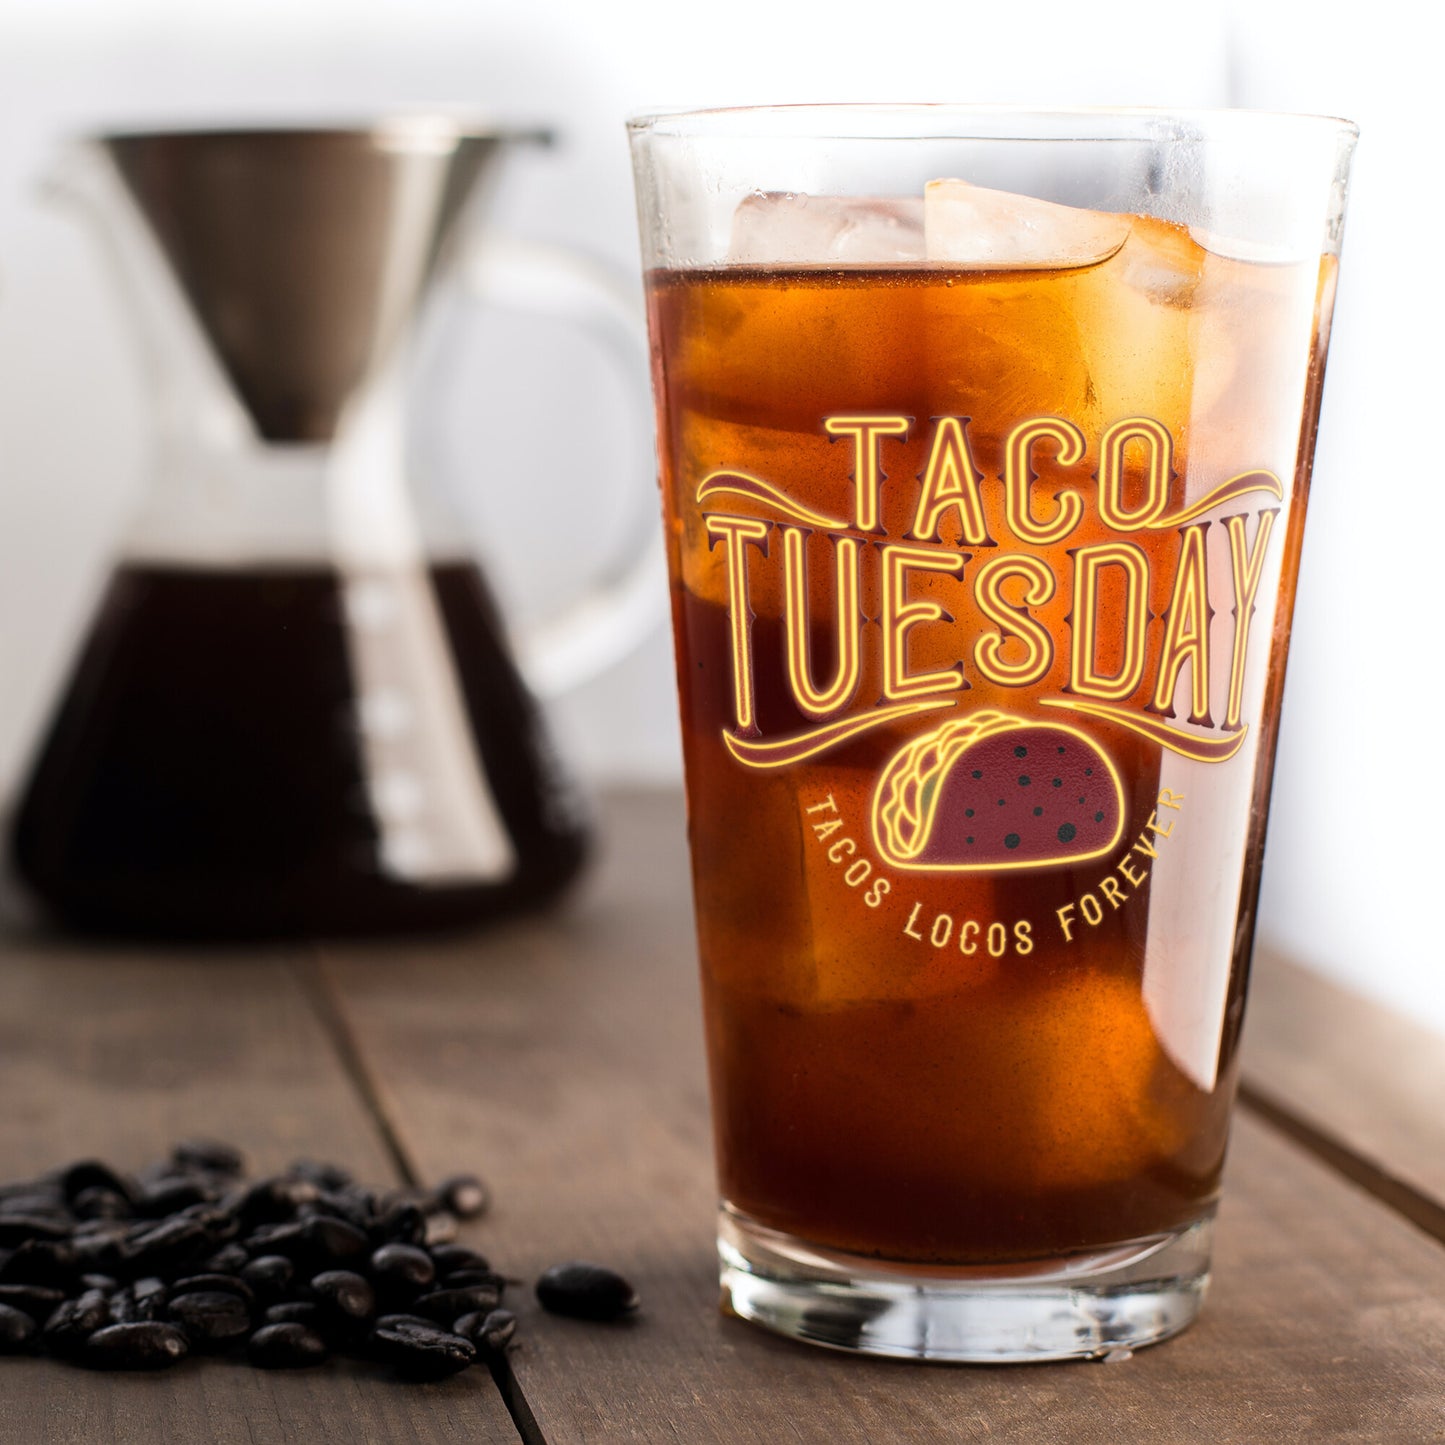 Taco Tuesday Pint Glass